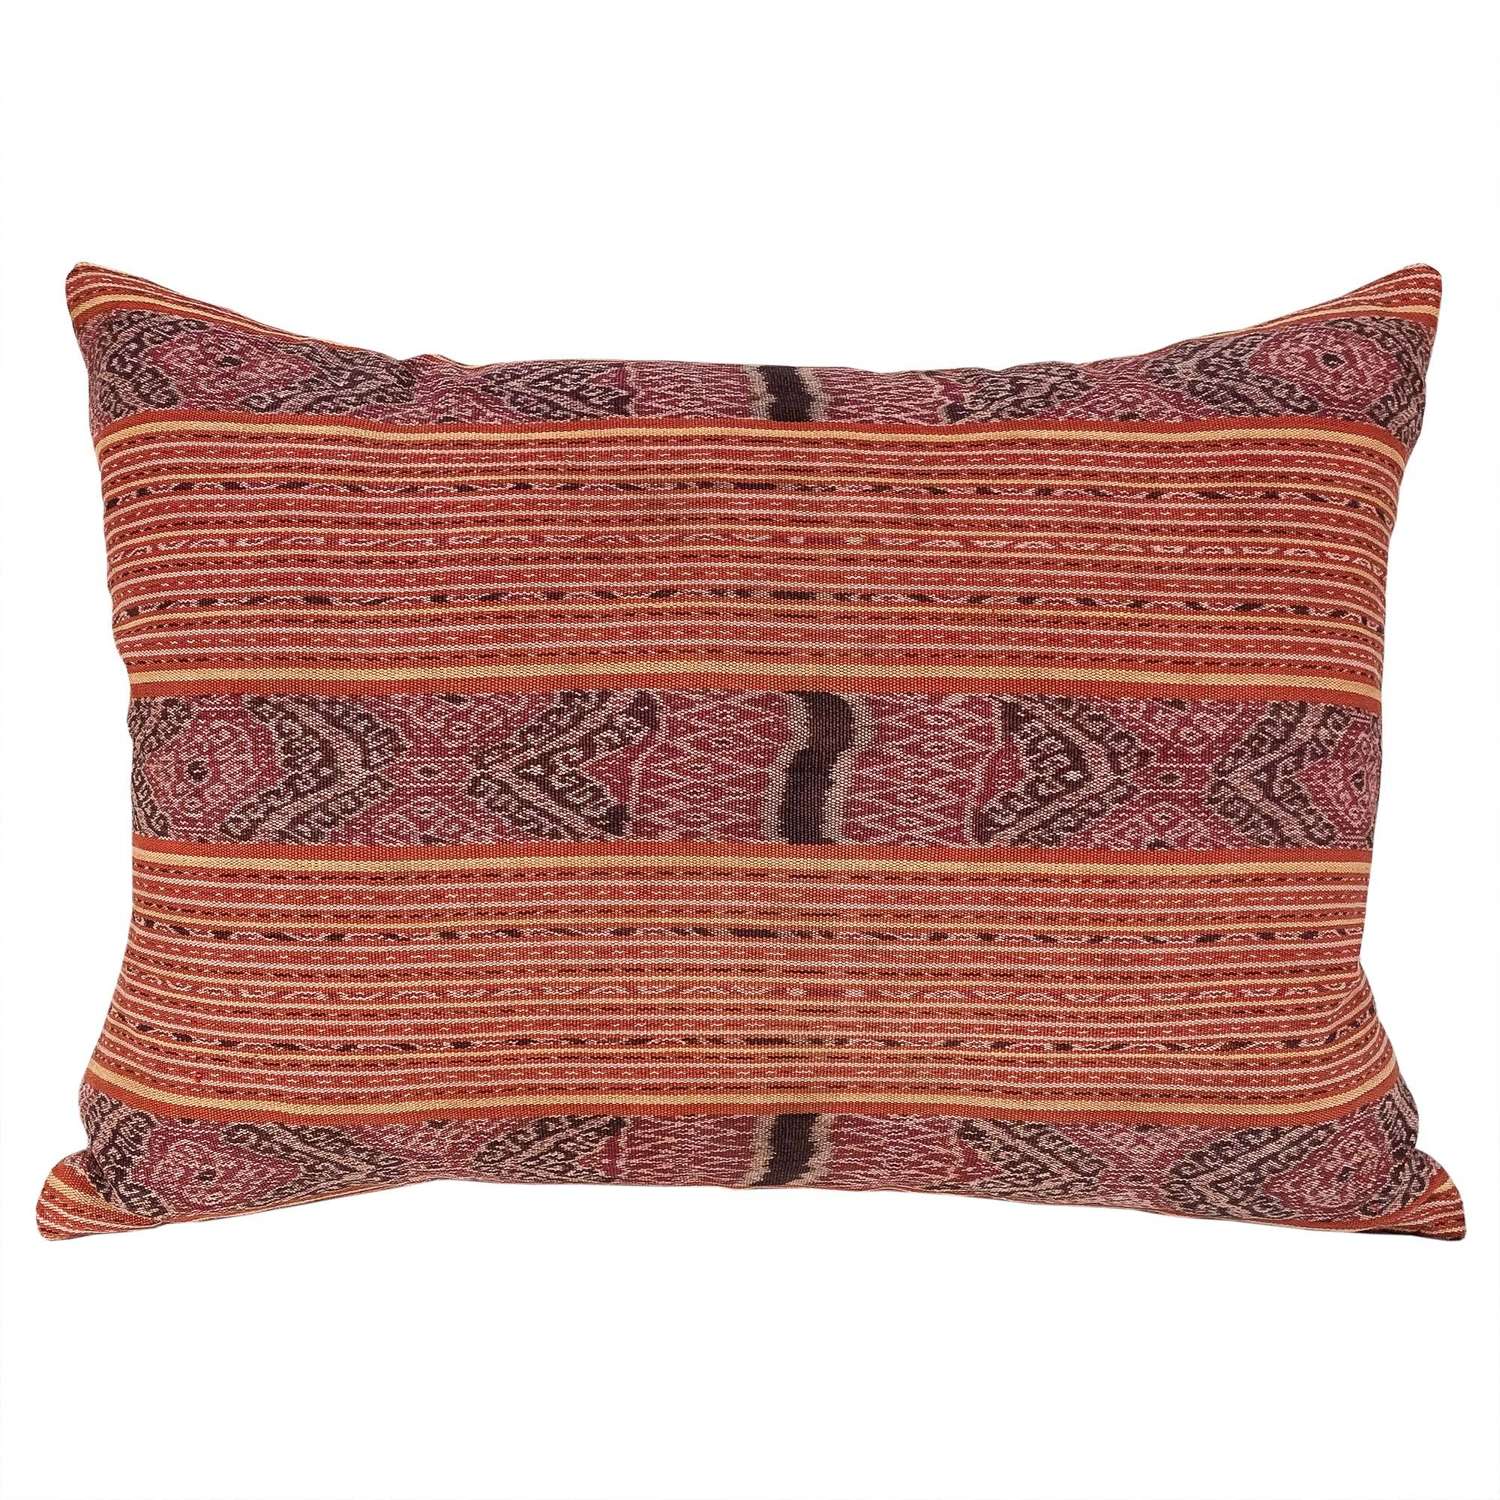 Timor ikat cushion